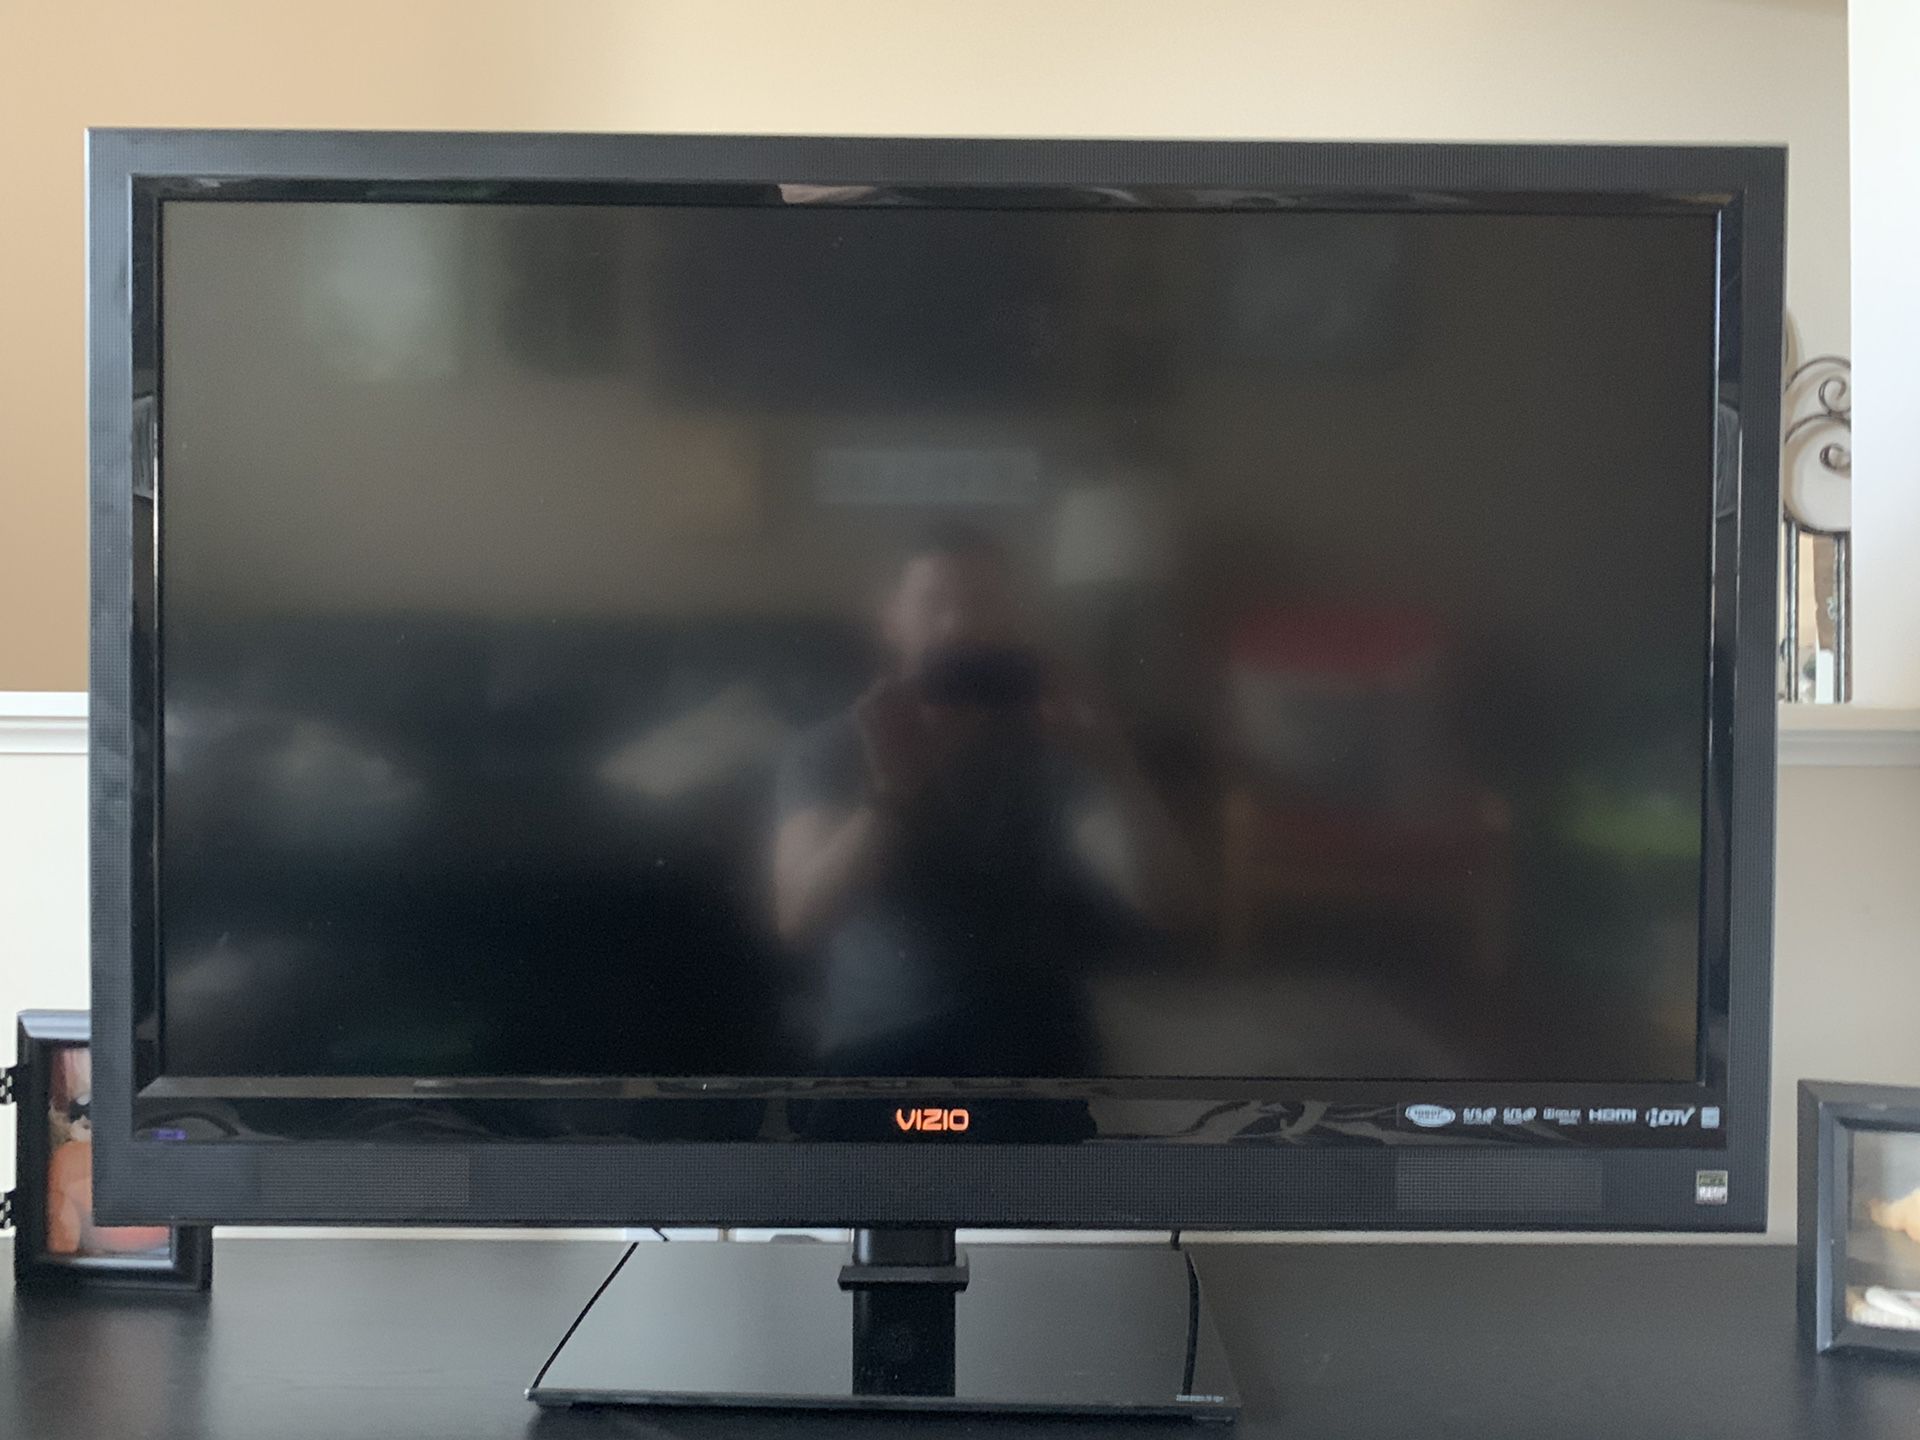 Vizio 42” 1080p LCD HDTV